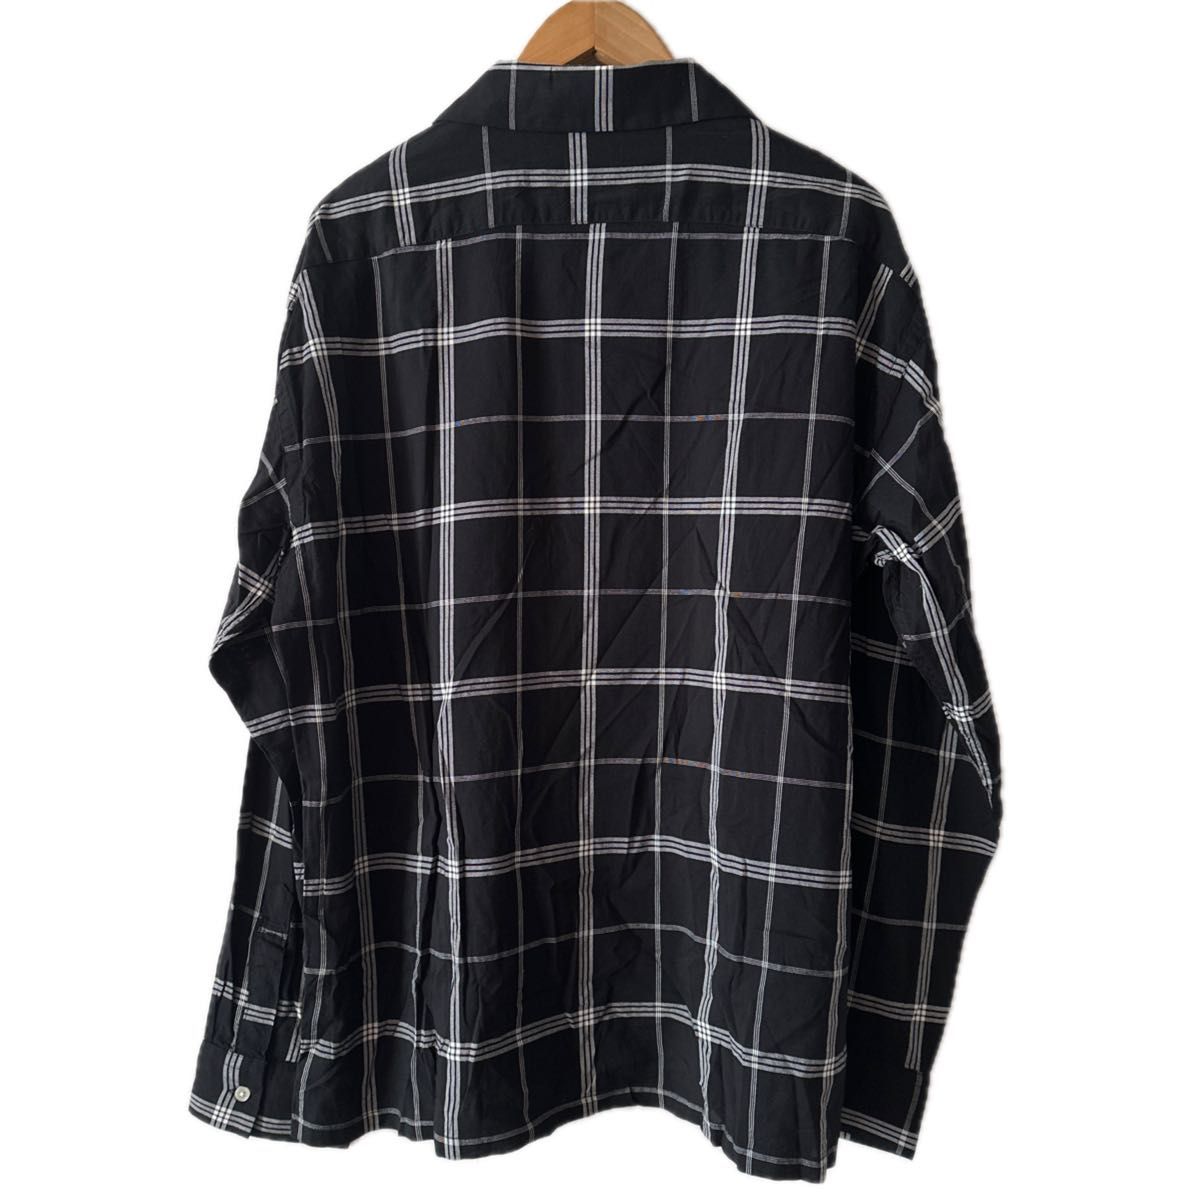 coen コーエン メンズオーバーサイズレーヨン混長袖オープンシャツ USED XL 黒白